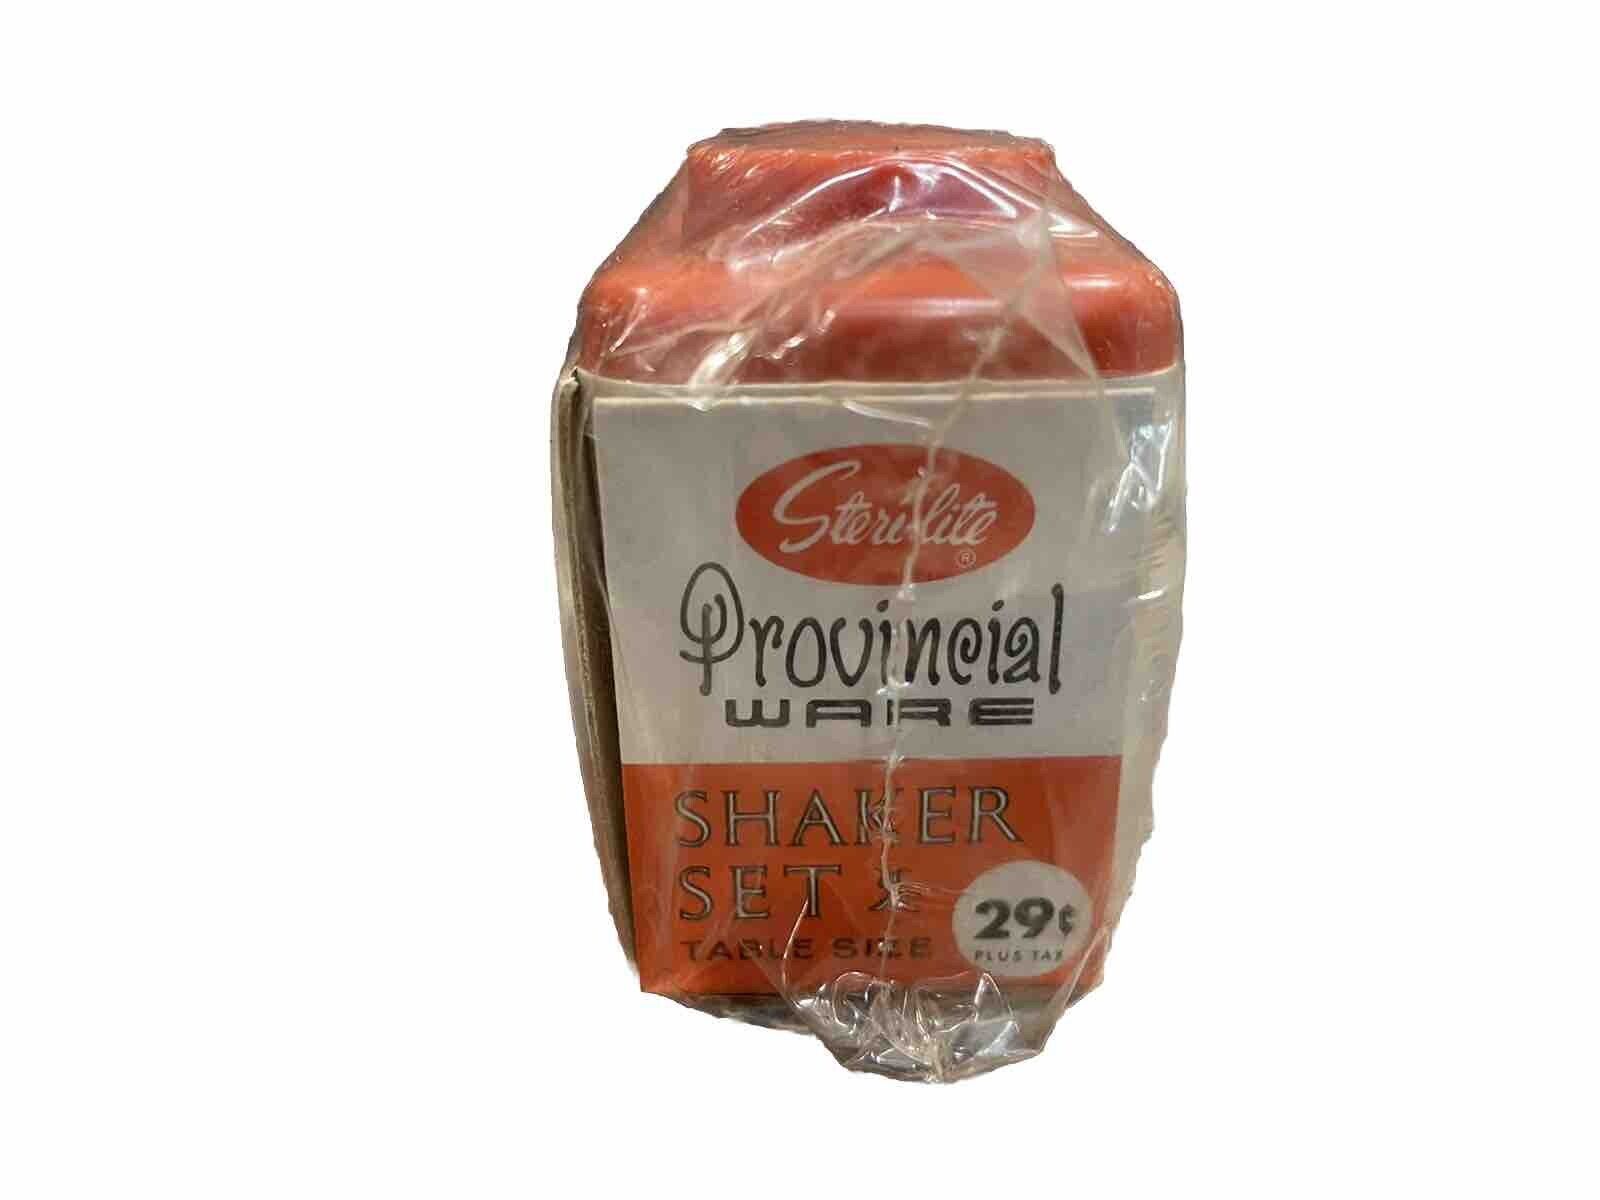 Sterilite Provincial Ware Shaker Set Vtg Salt Pepper Table Size USA 1950s UNUSED